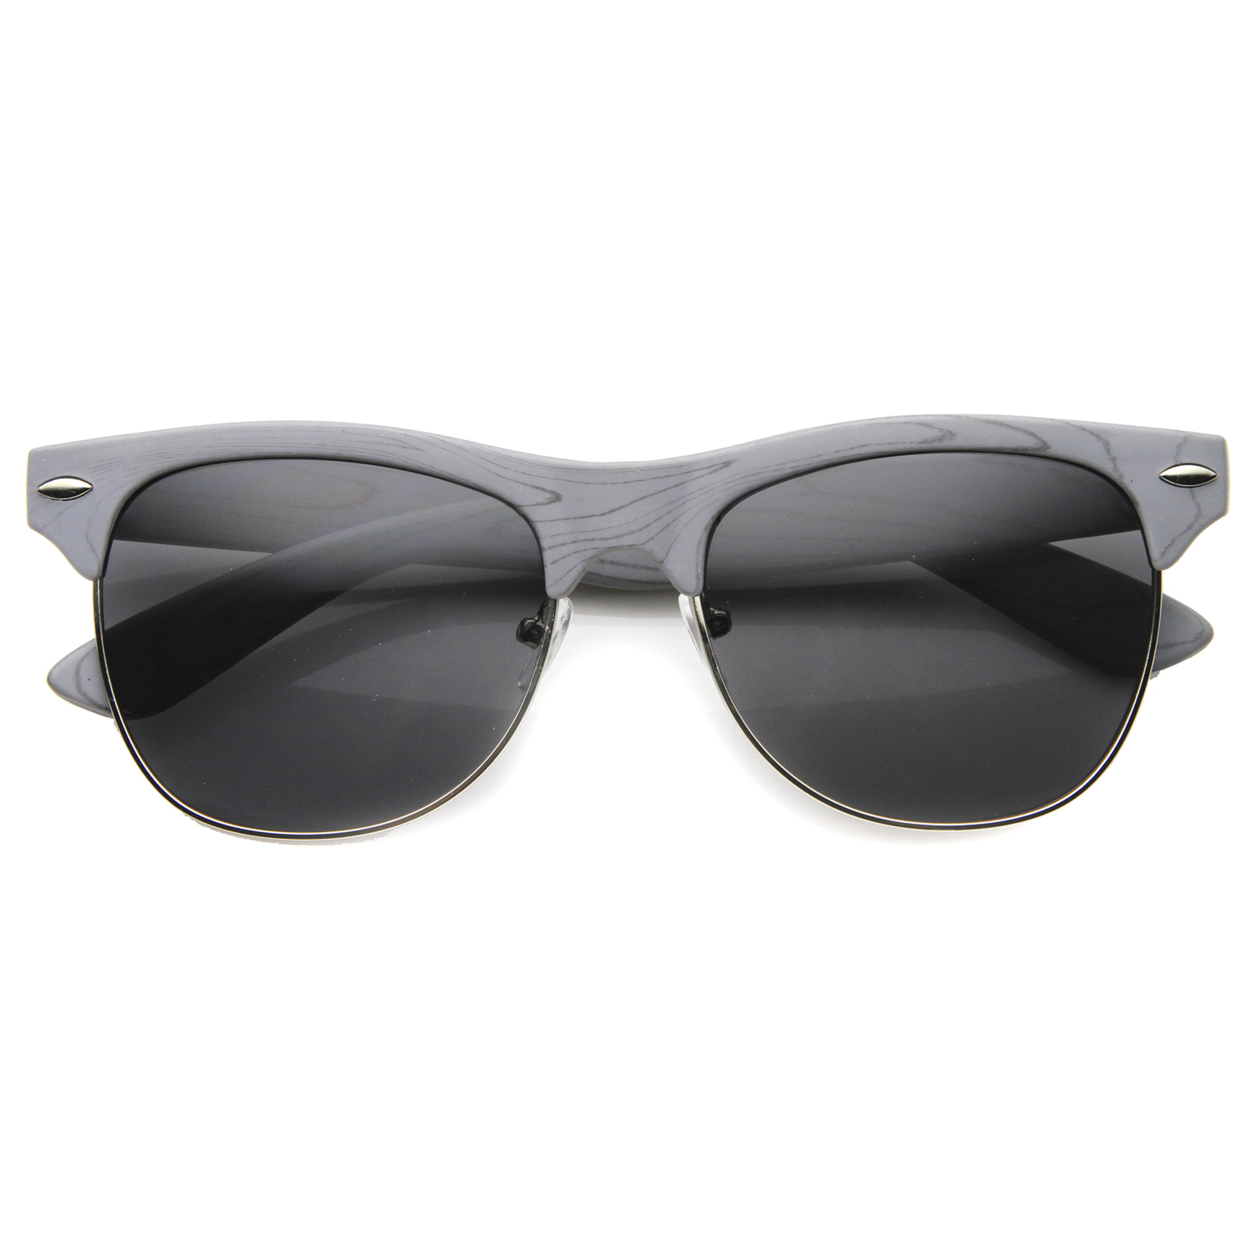 Mens Semi-Rimless Sunglasses With UV400 Protected Composite Lens 9959 - Grey / Smoke